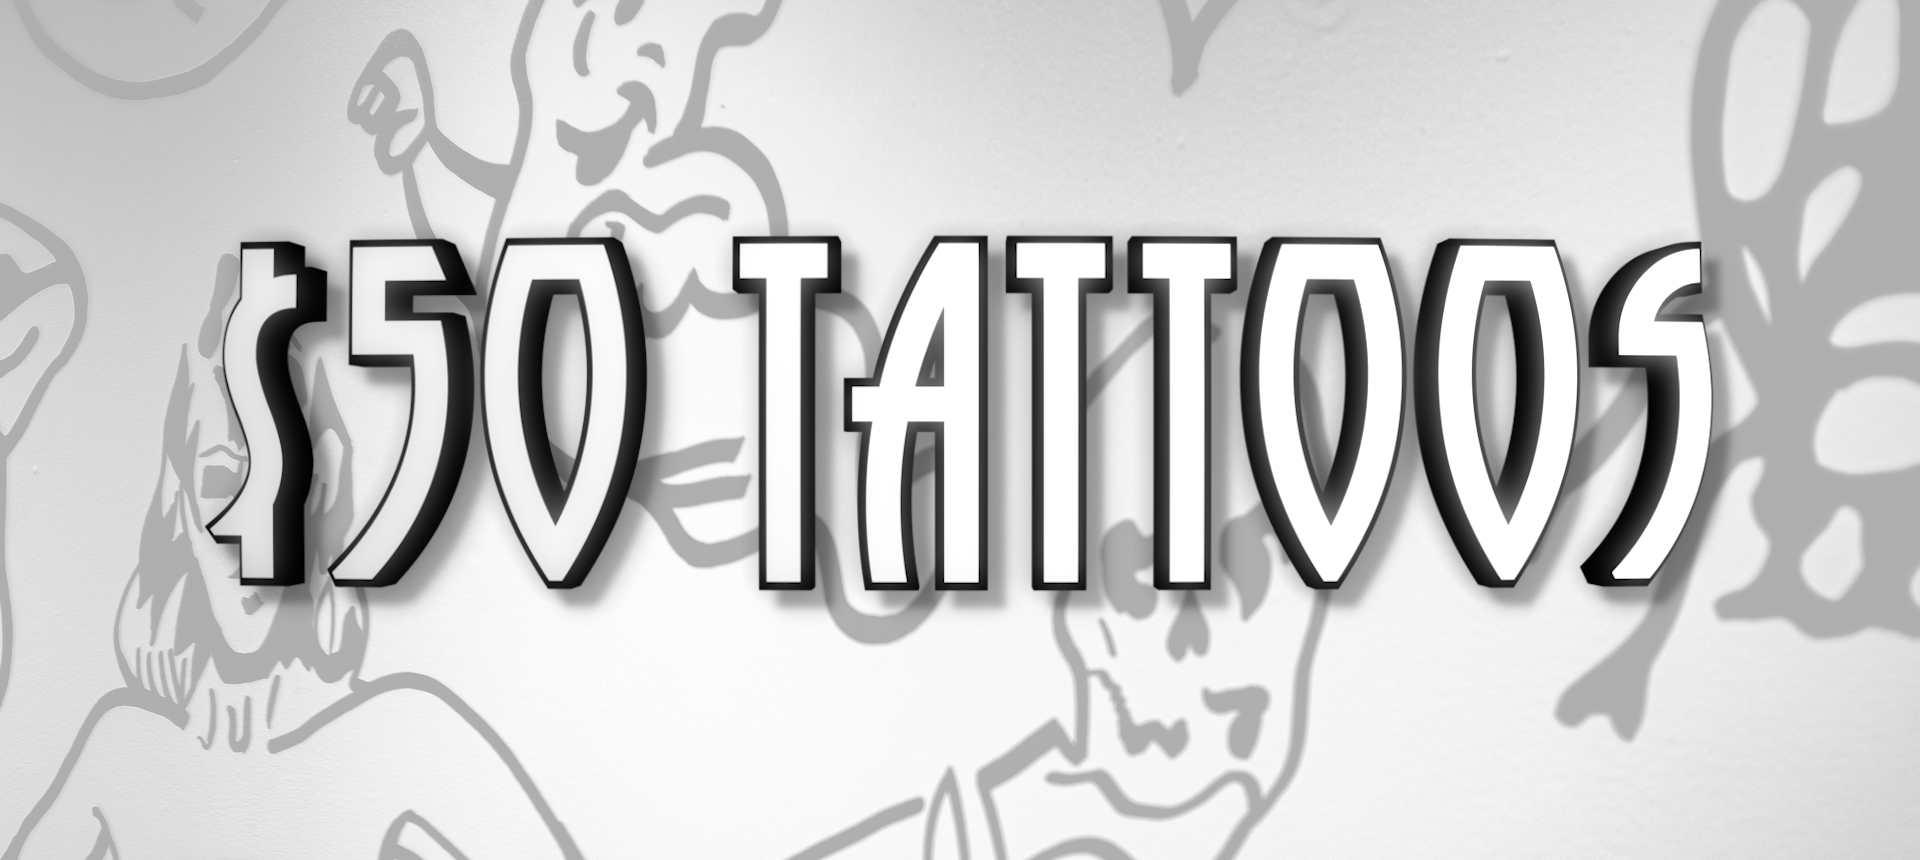 Tattoo & Piercing Deals & Specials Brooklyn & Manhattan | Live By The Sword  Tattoo